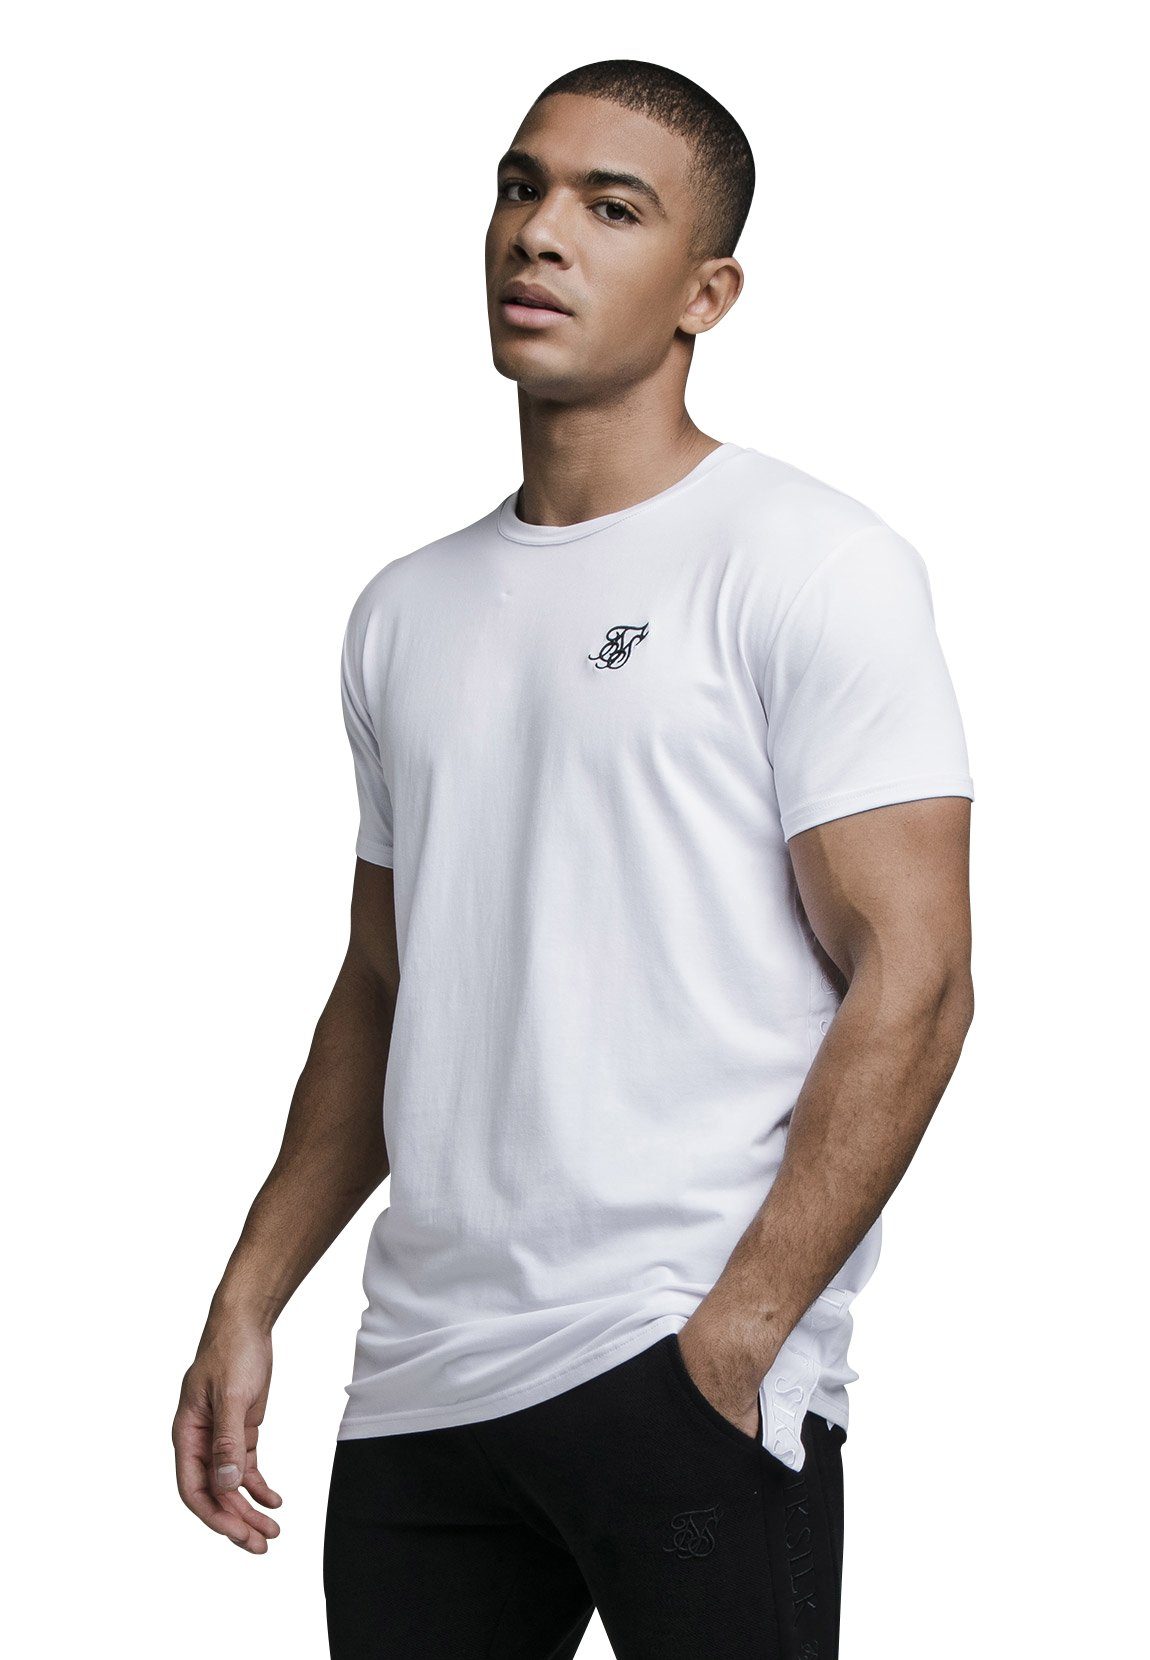 S/S White TAPE T-Shirt Siksilk EMBROIDERED Herren TEE SS-19130 SikSilk Weiß T-Shirt